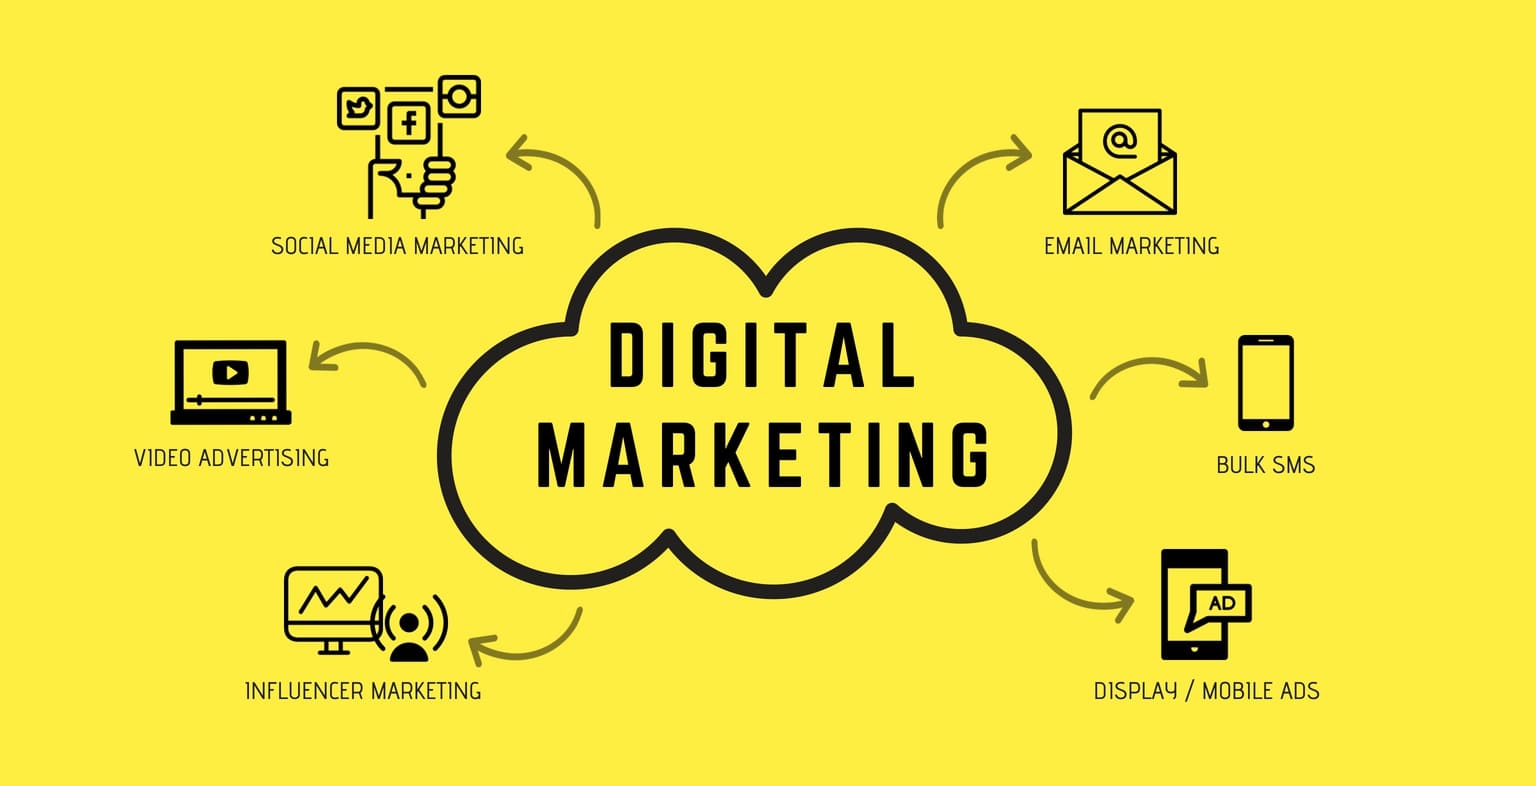 How do I earn money in digital marketing?